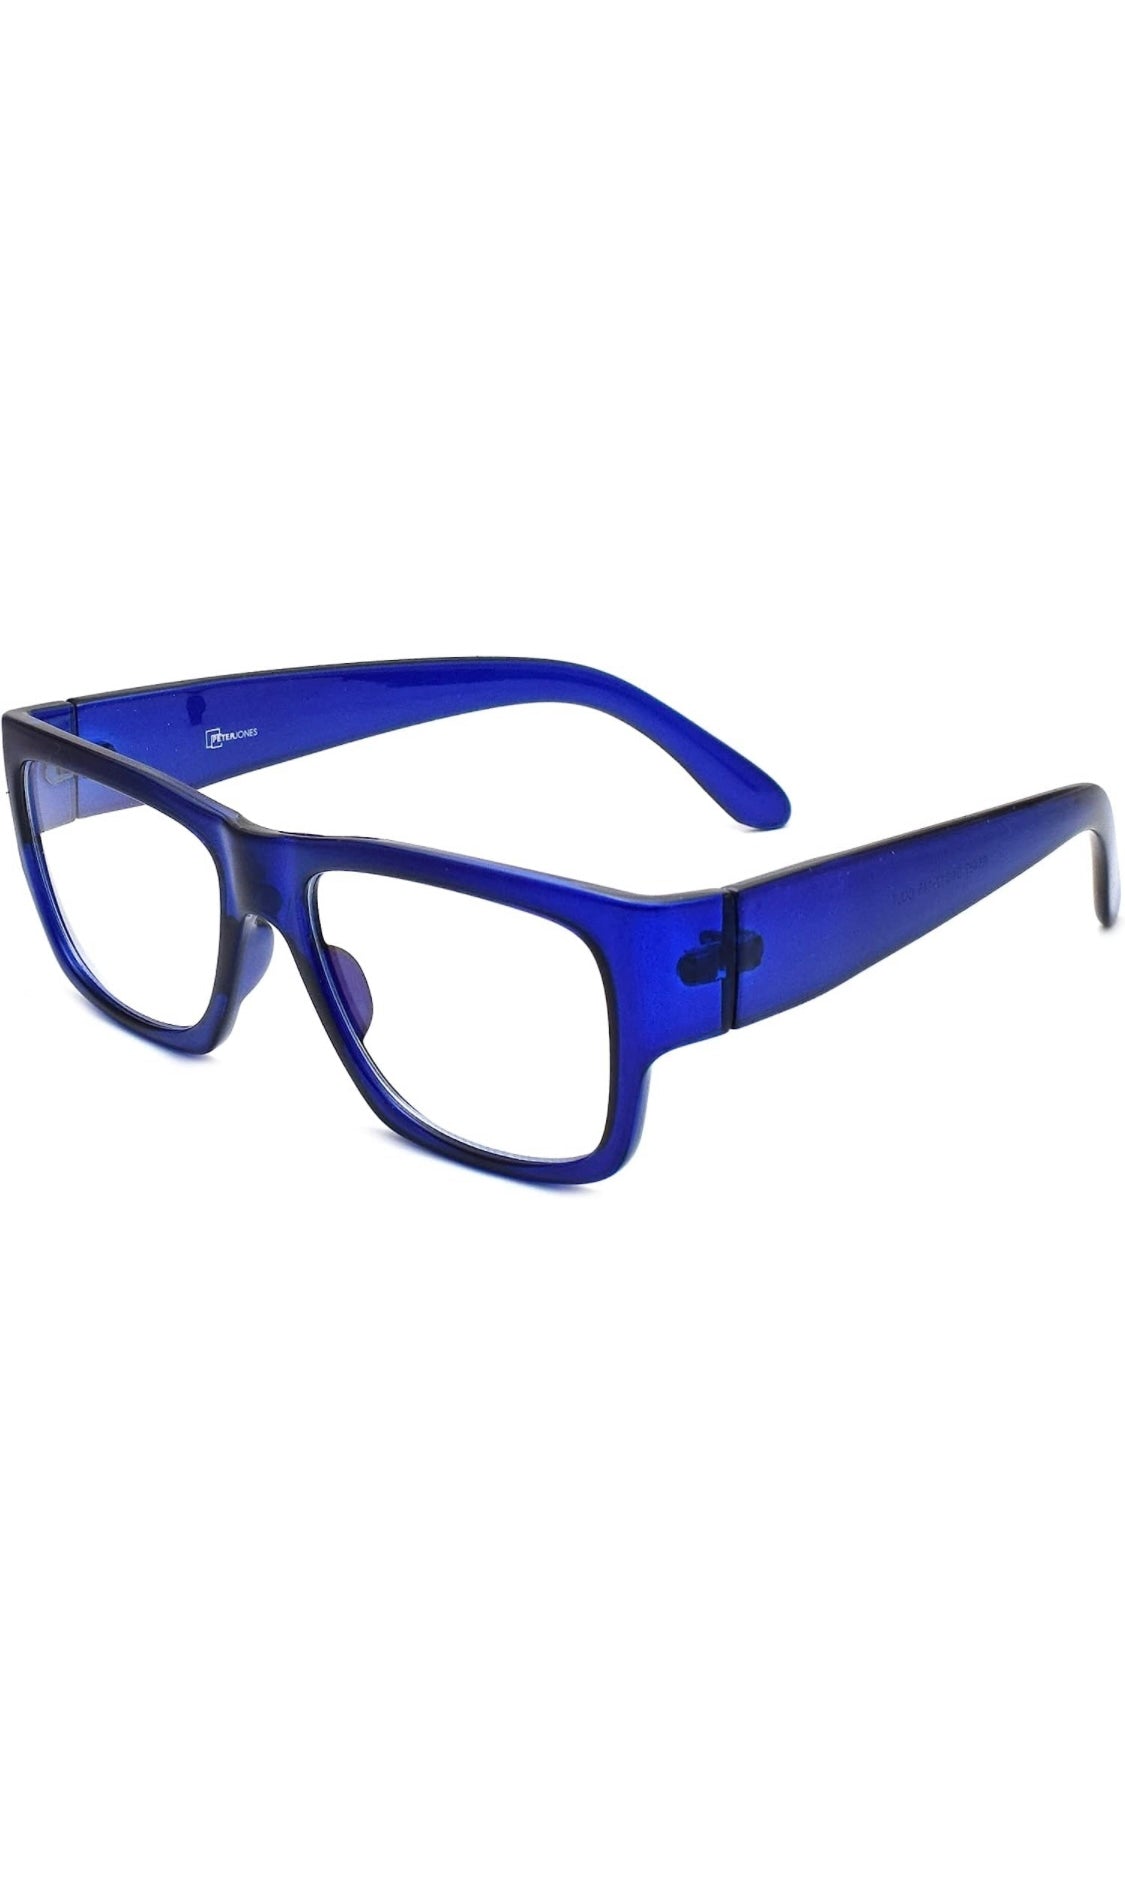 Jodykoes Thick Frame Unisex Anti Glare Eyeglasses Eyewear Spectacle (Blue) - Jodykoes ®